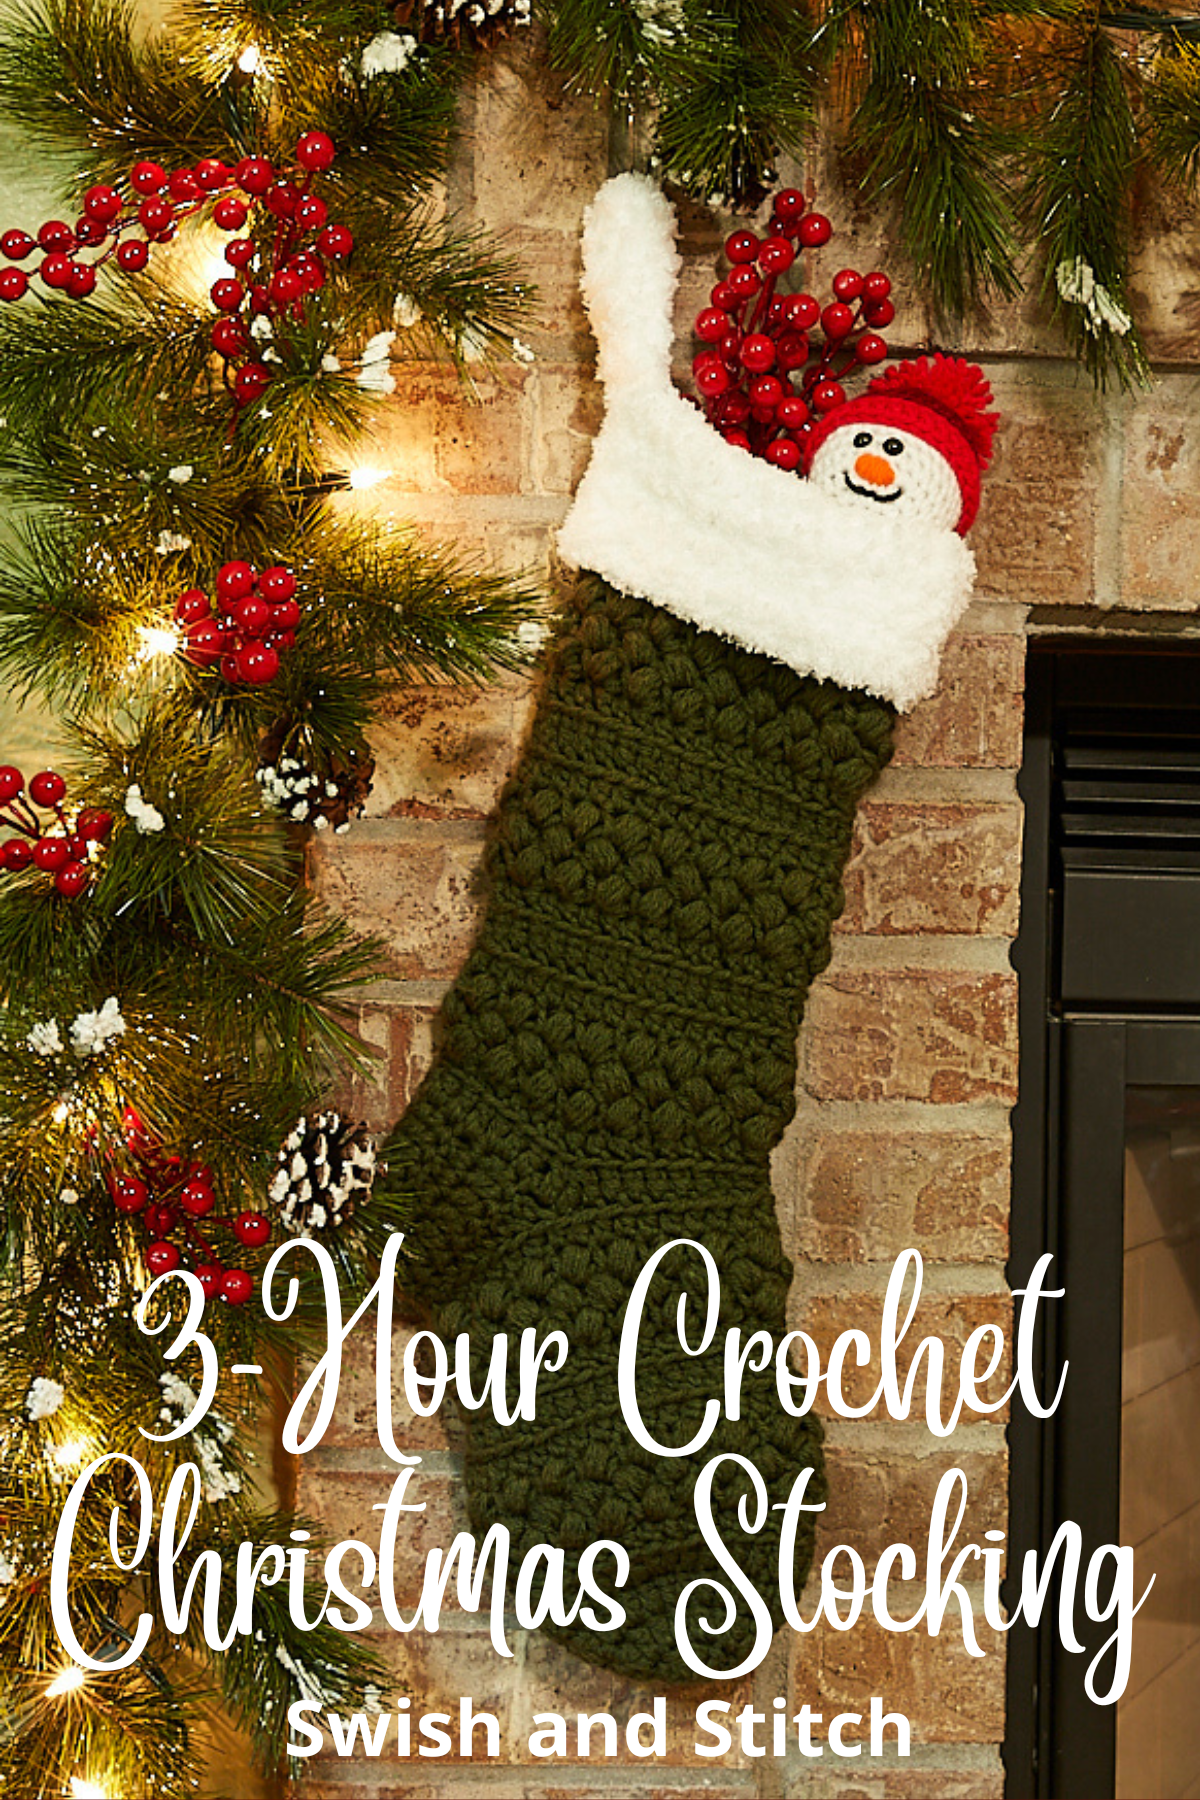 Vail Crochet Christmas Stocking Pattern - Pinterest pin